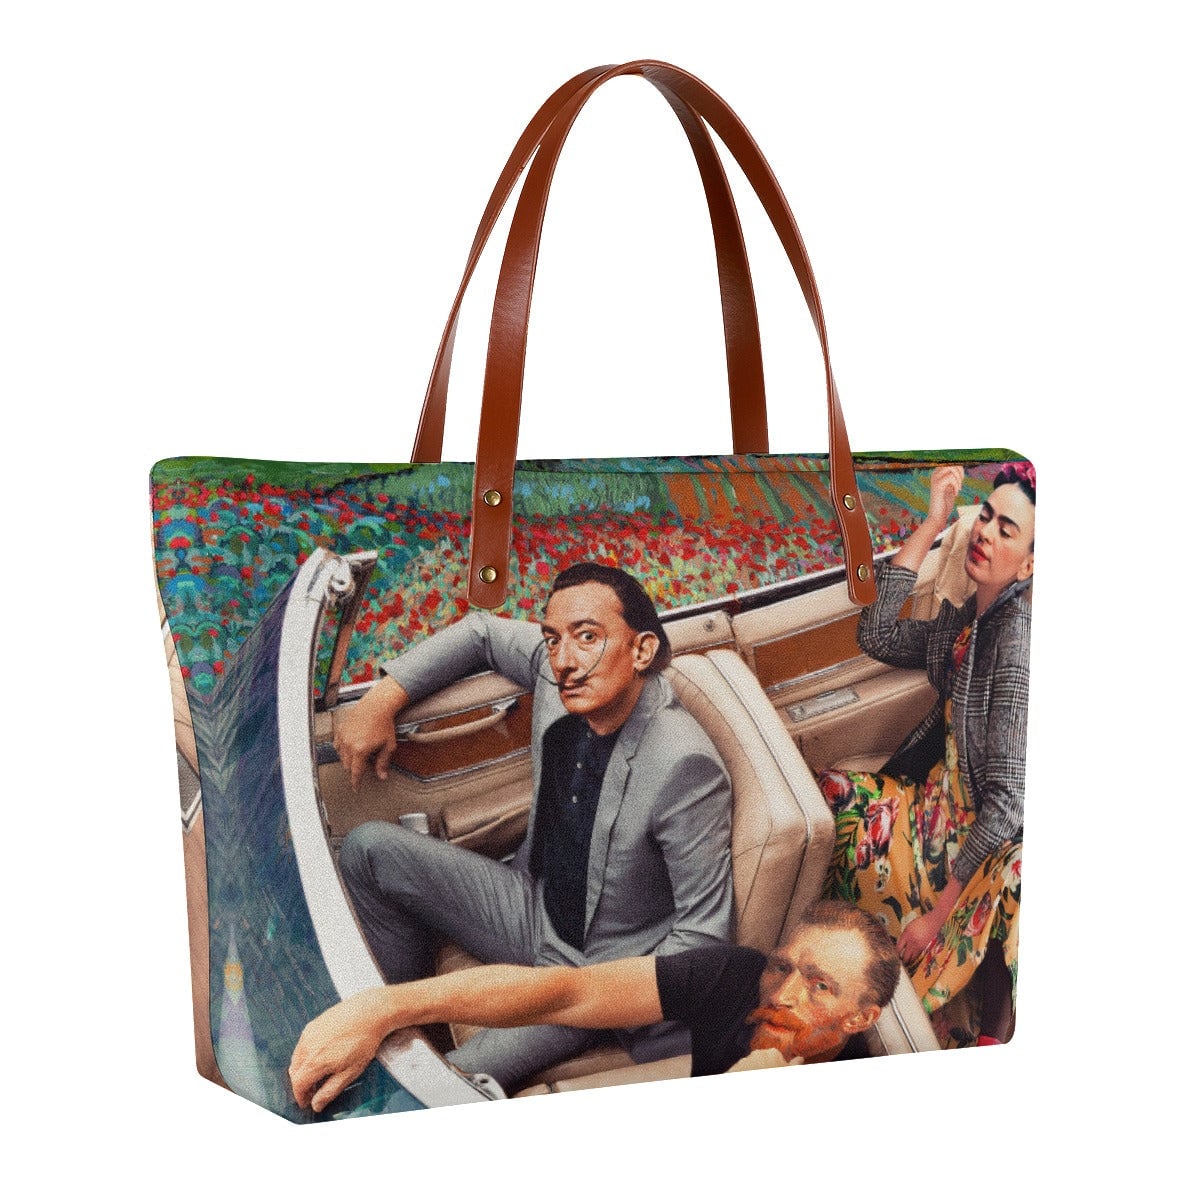 Van Gogh Dali and Frida Kahlo Iconic Artists Tote Bag